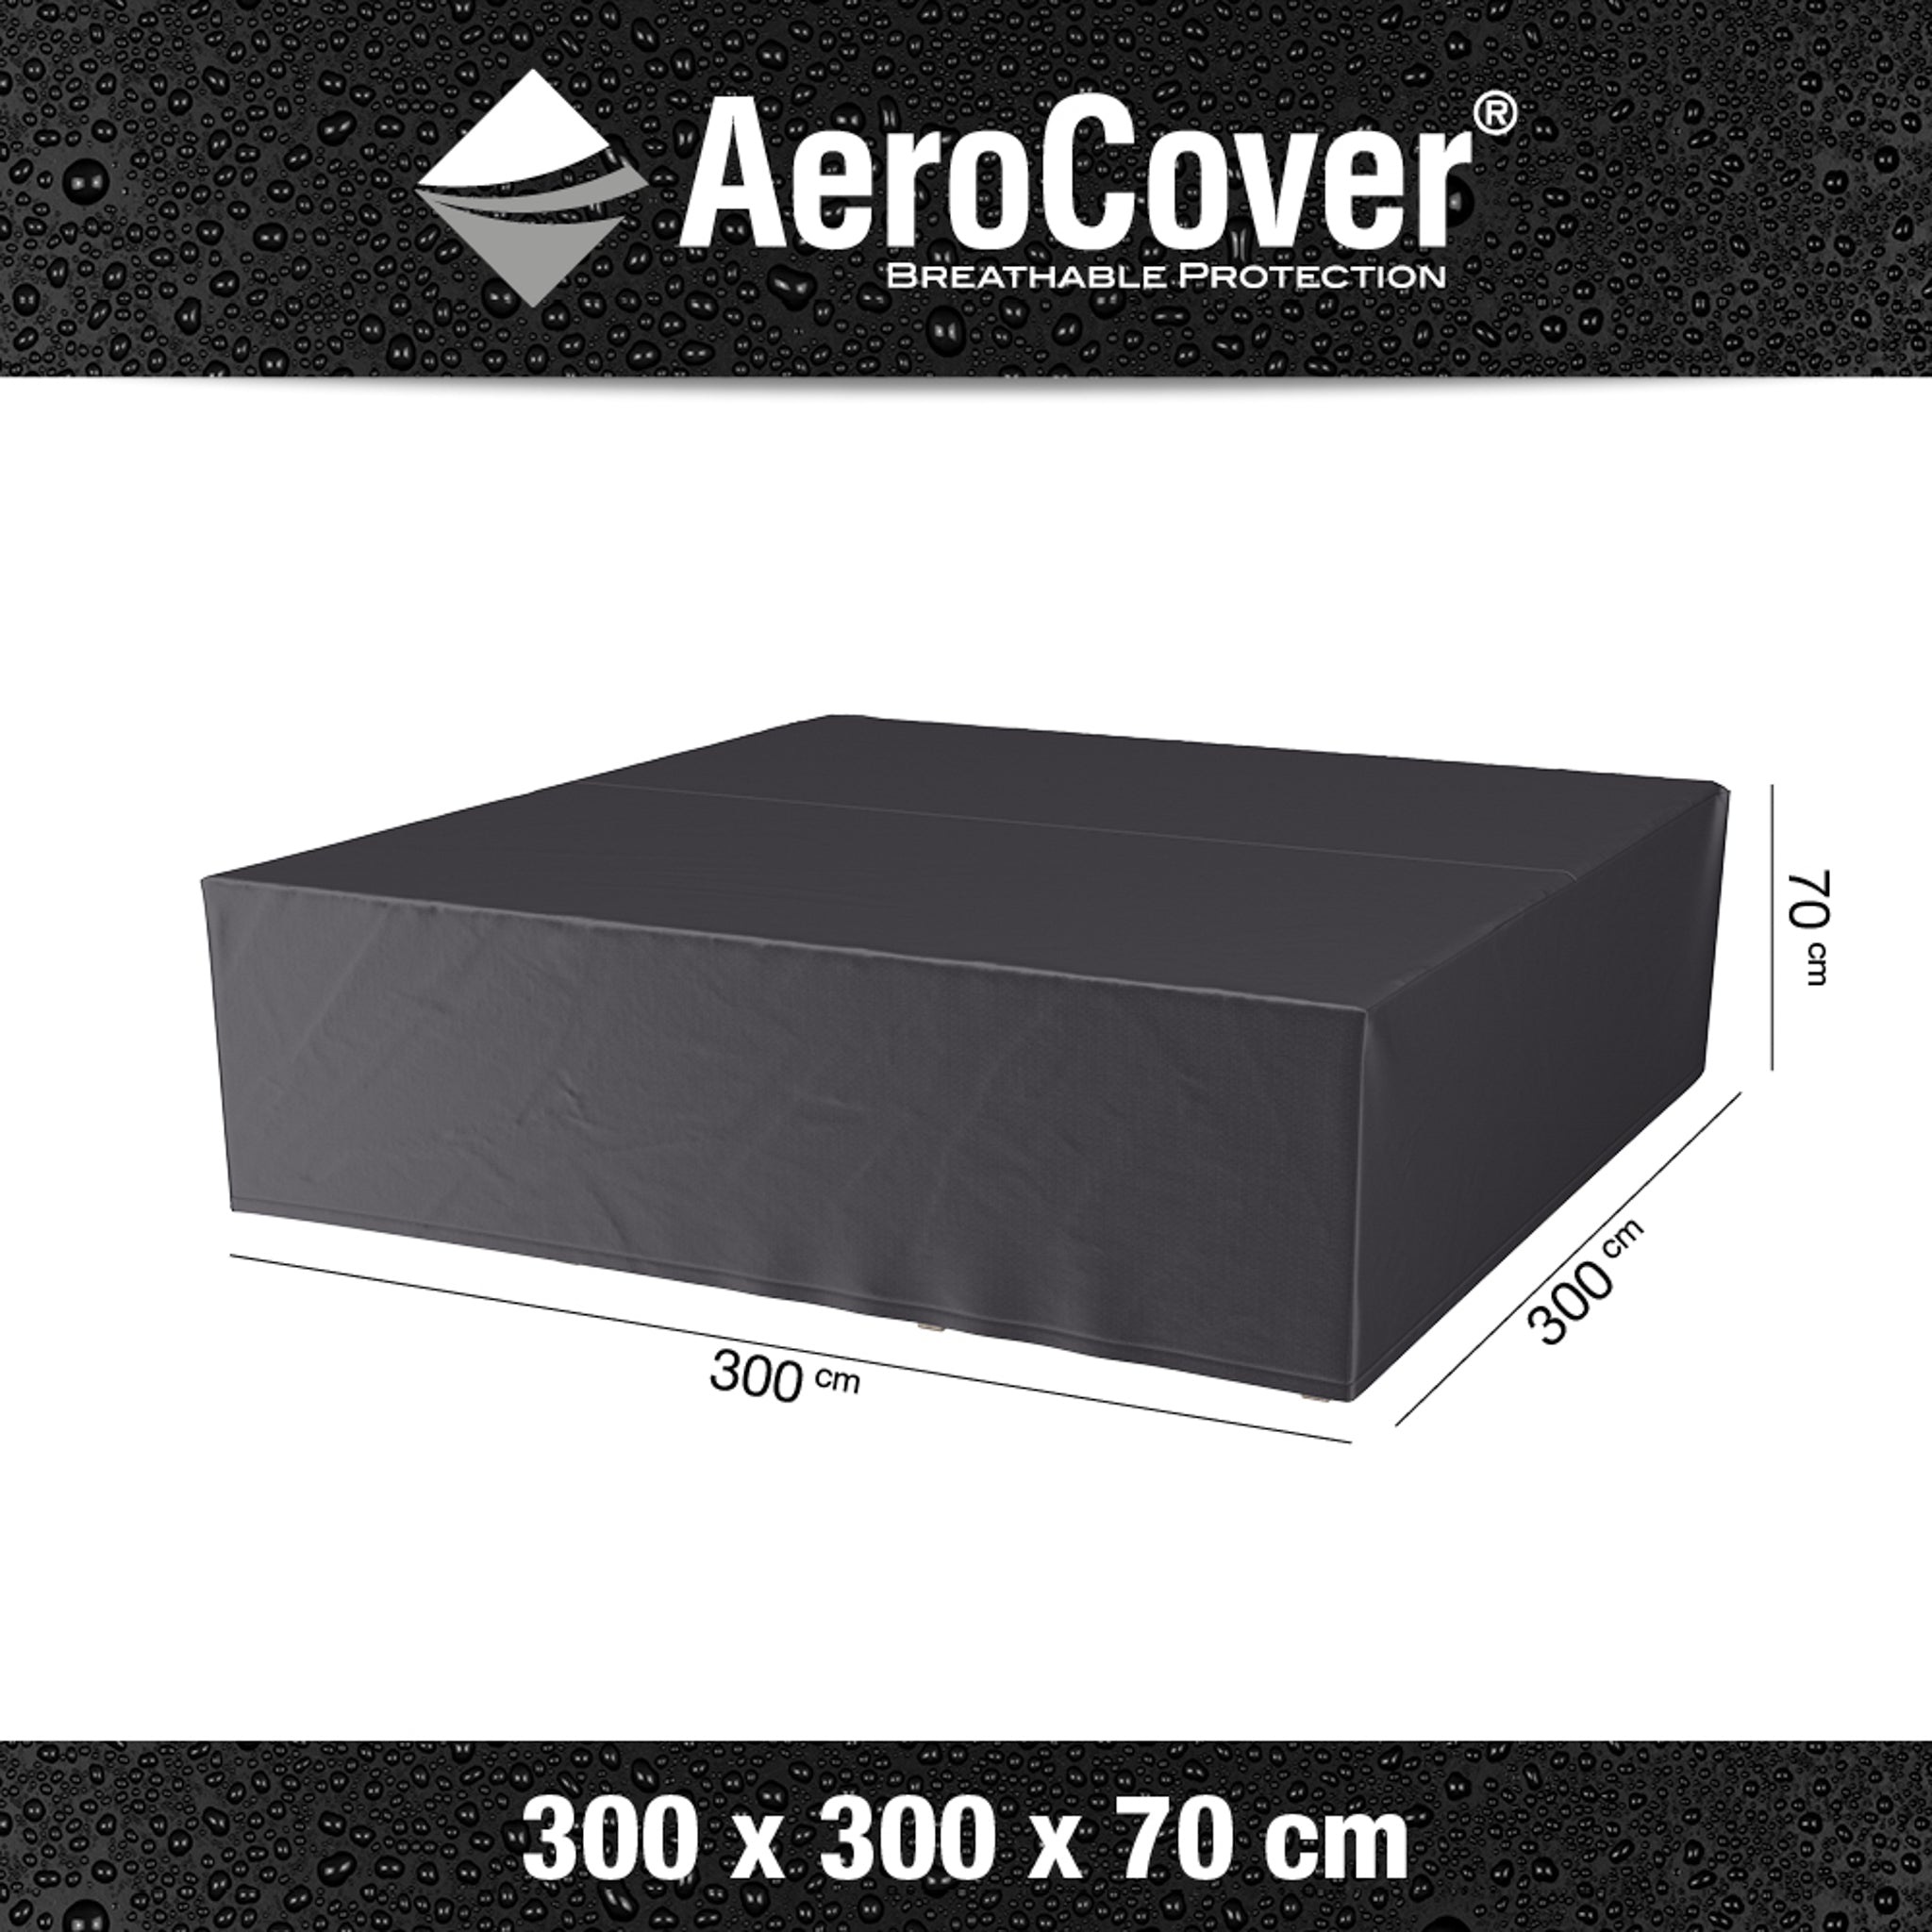 AeroCover - Square Lounge Set Cover 300 x 300 x 70cm high